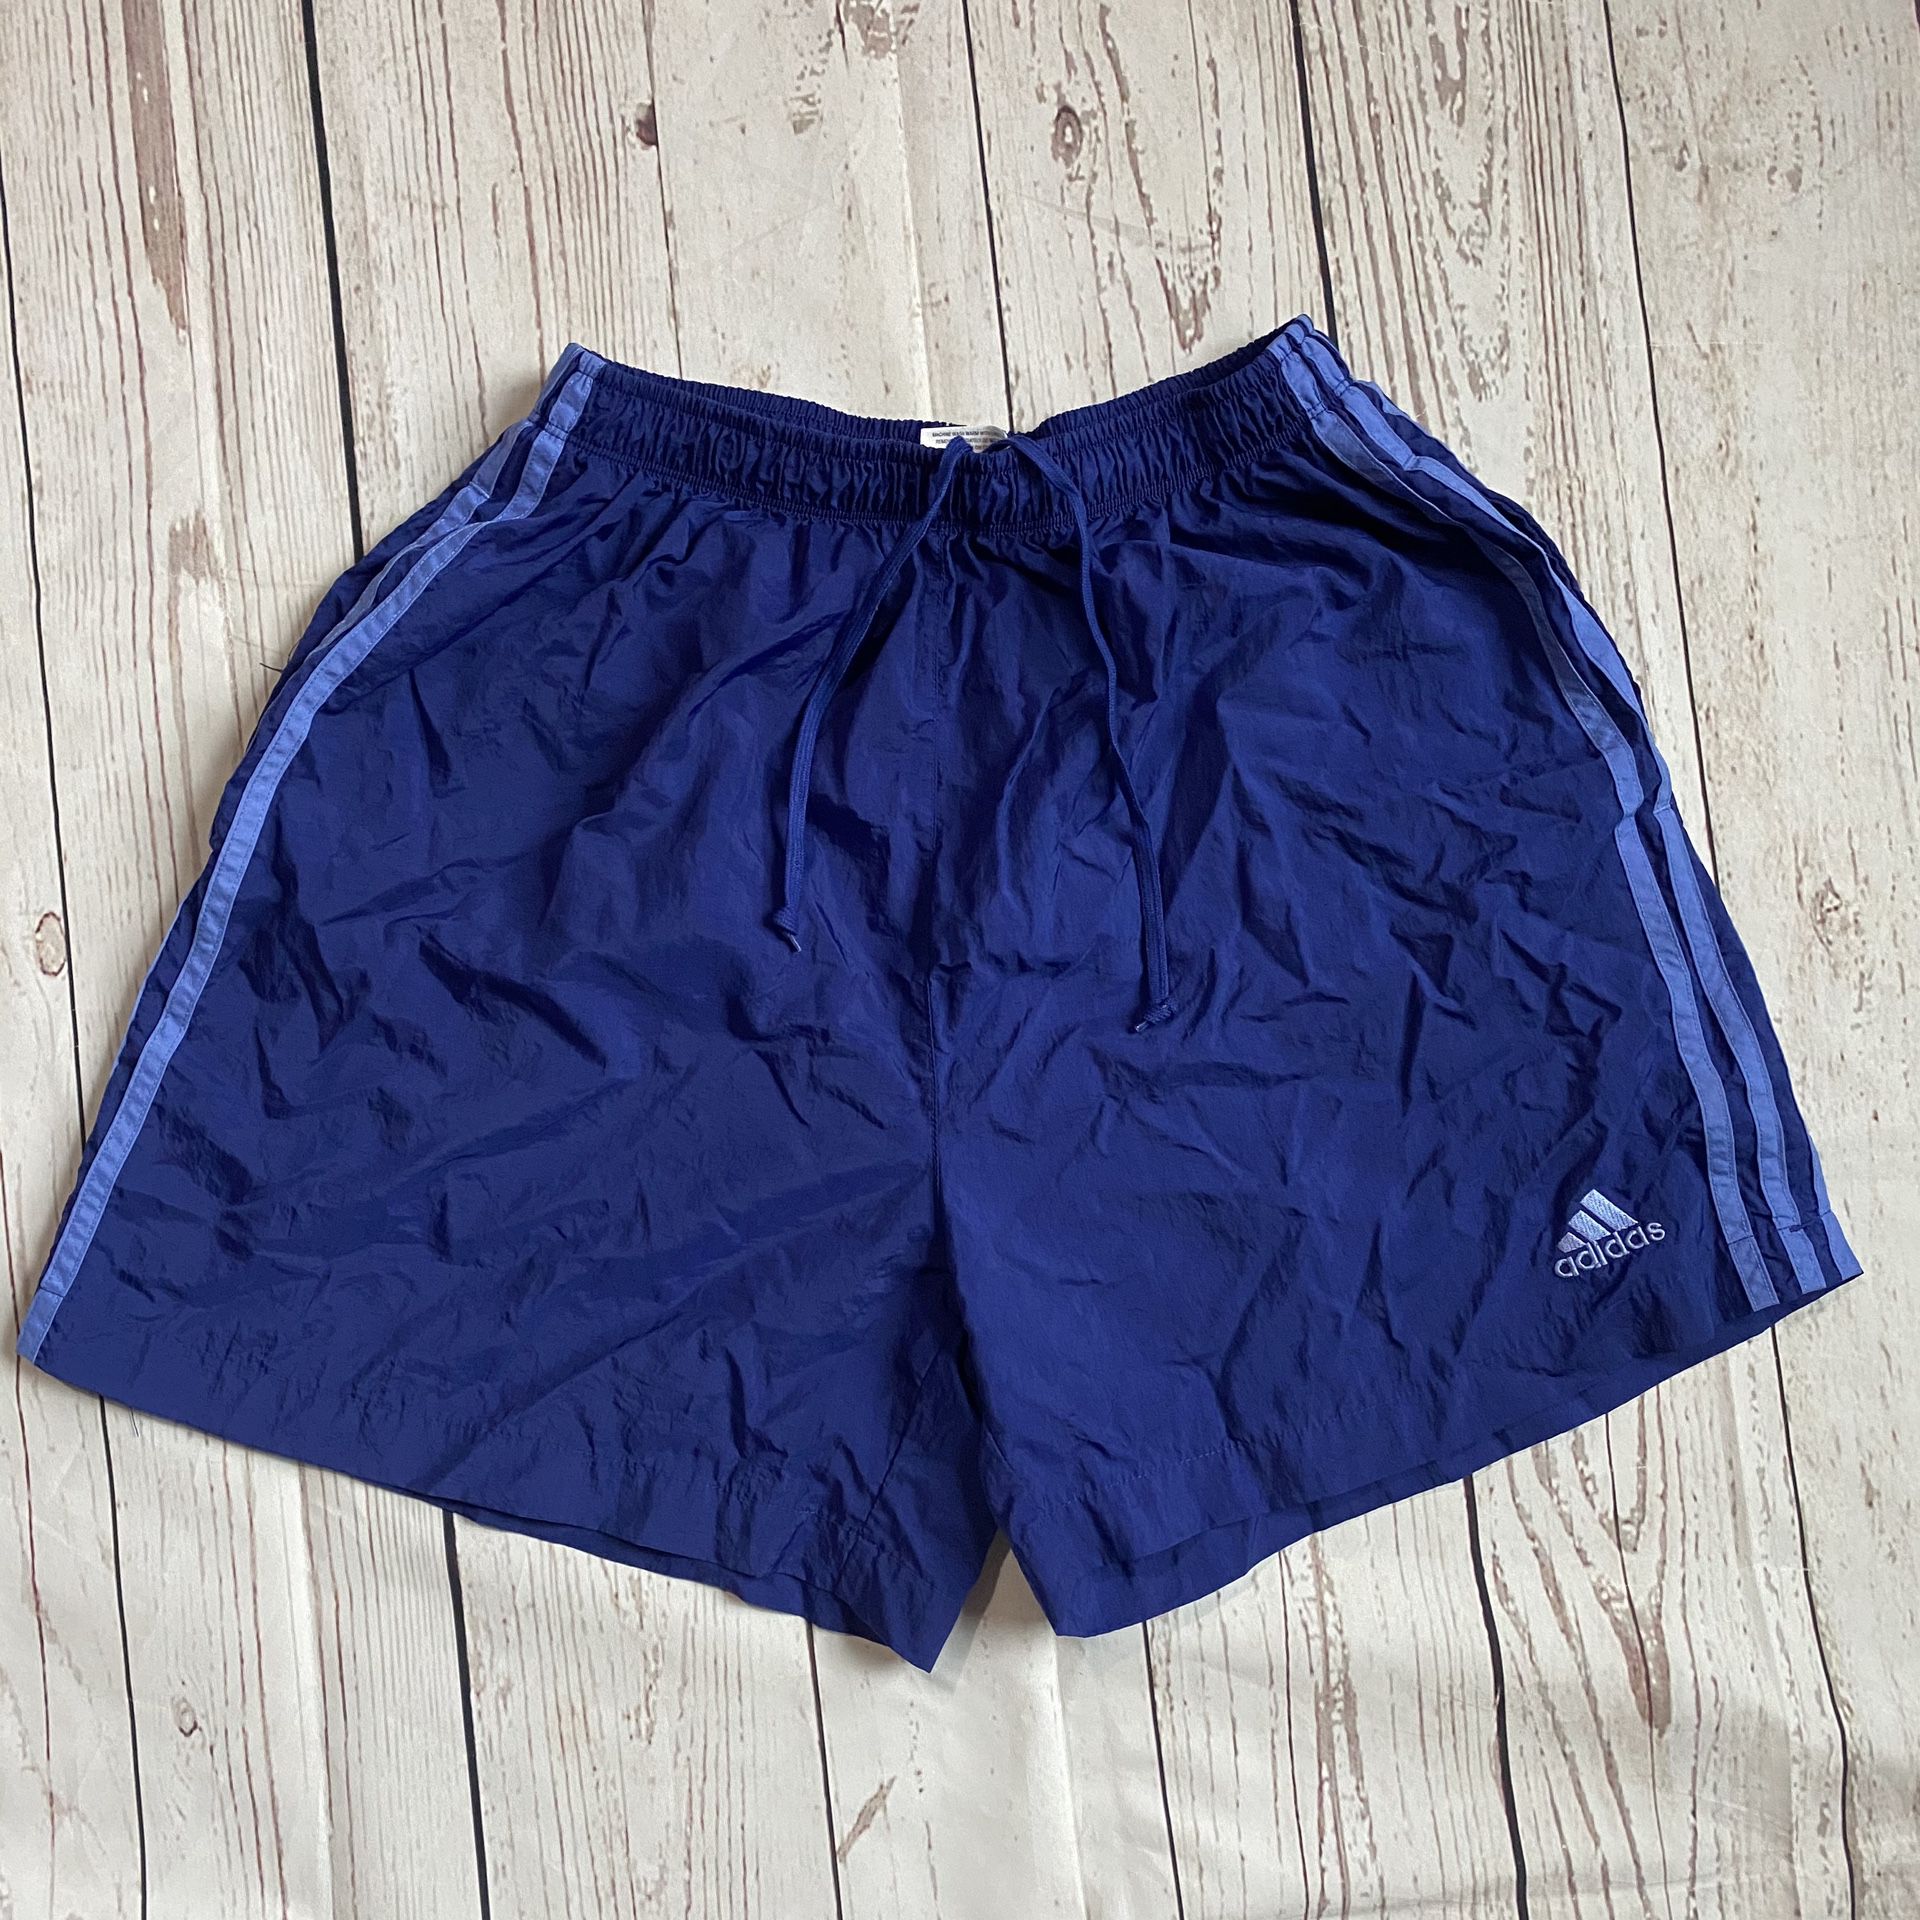 VTG 90s Adidas Athletic Shorts